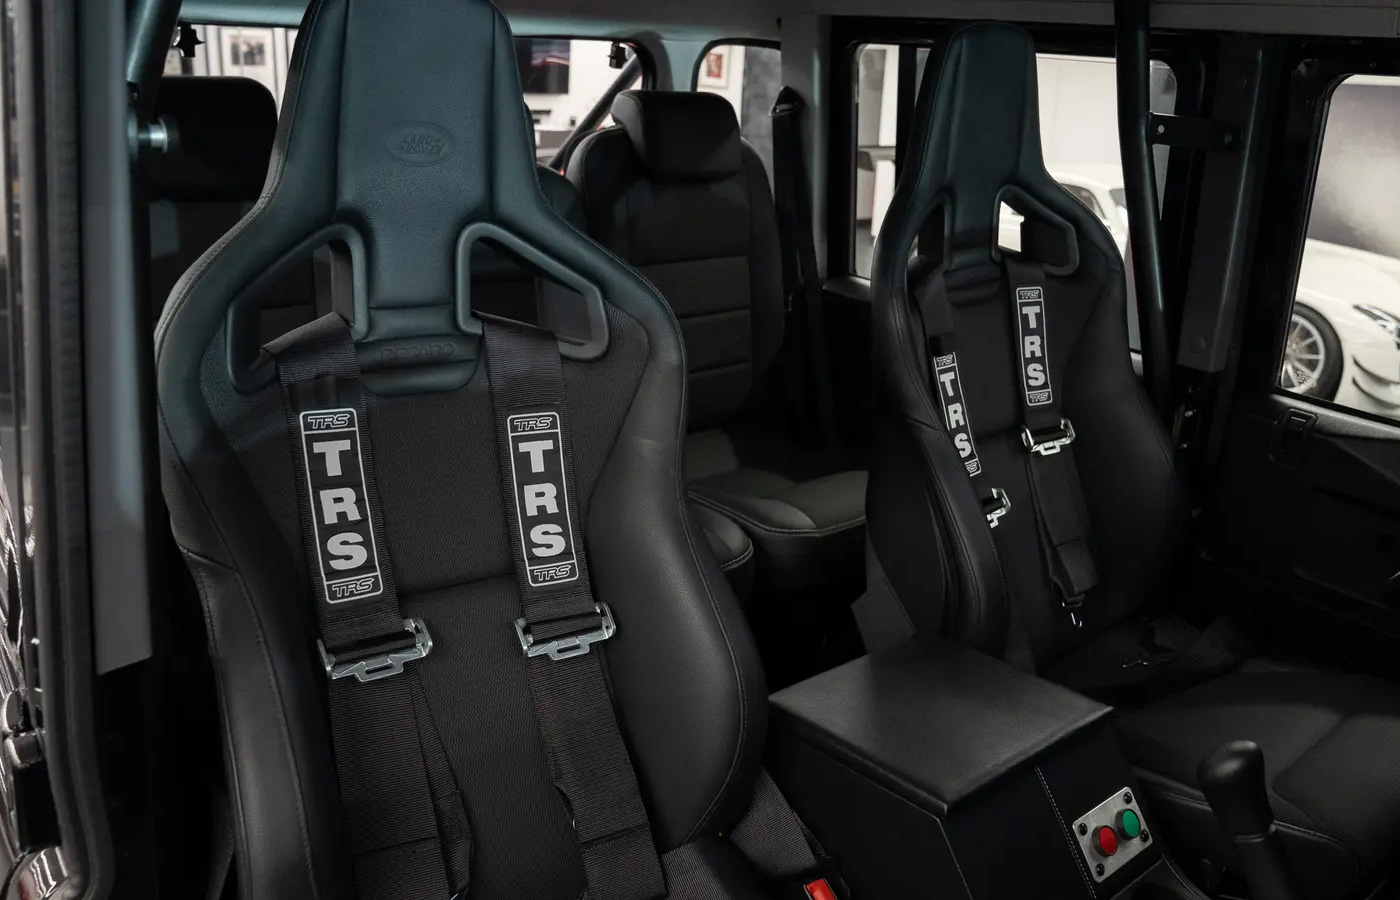 Land Rover Defender 110 SVX 007 SPECTRE edition for sale Tom Hartley interior seats seatbelts